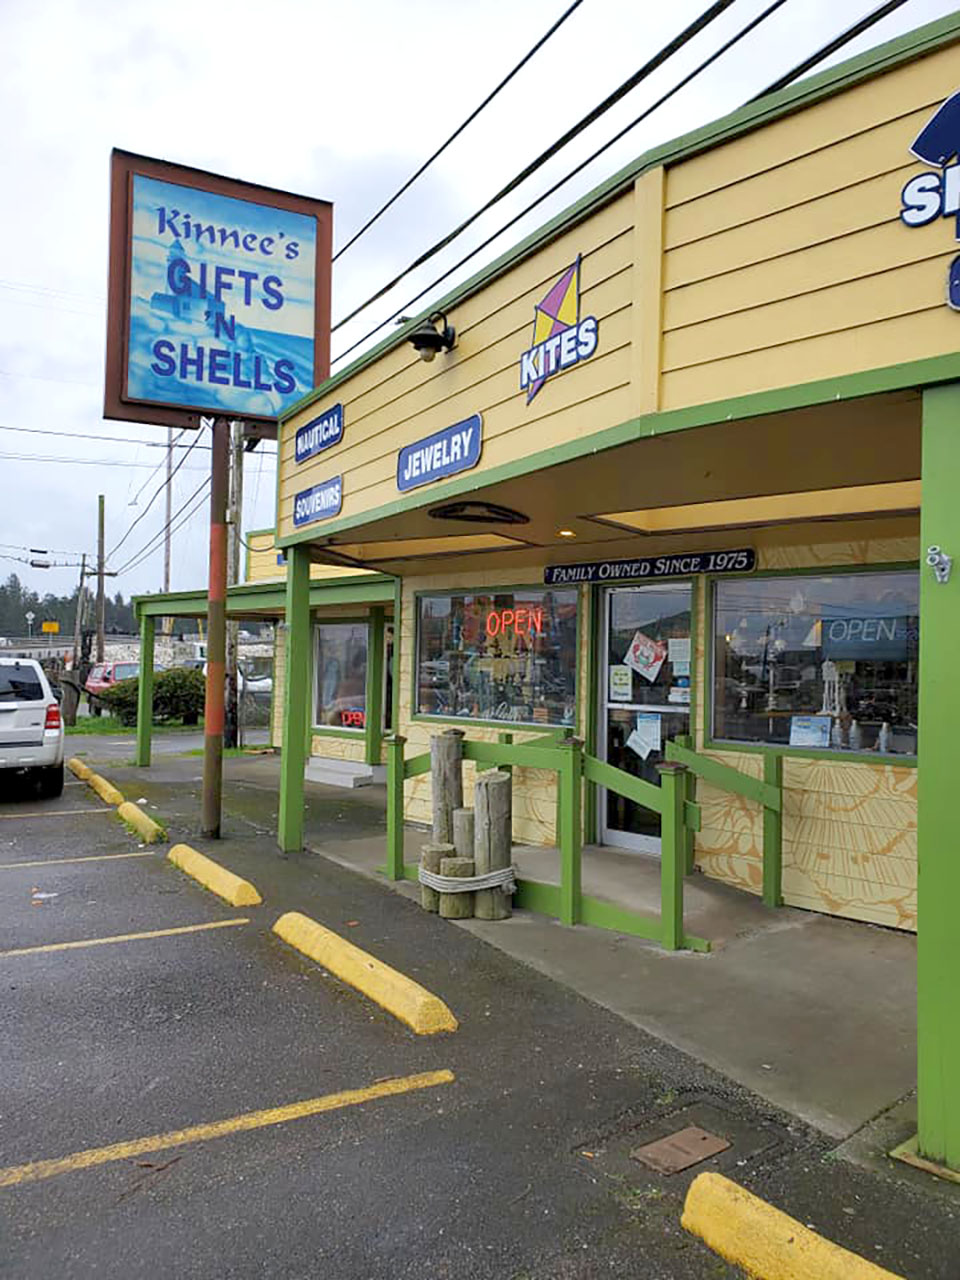 Sign-and-Exterior-Kinnees-Gifts-and-Shells-Charleston-Oregon.jpg